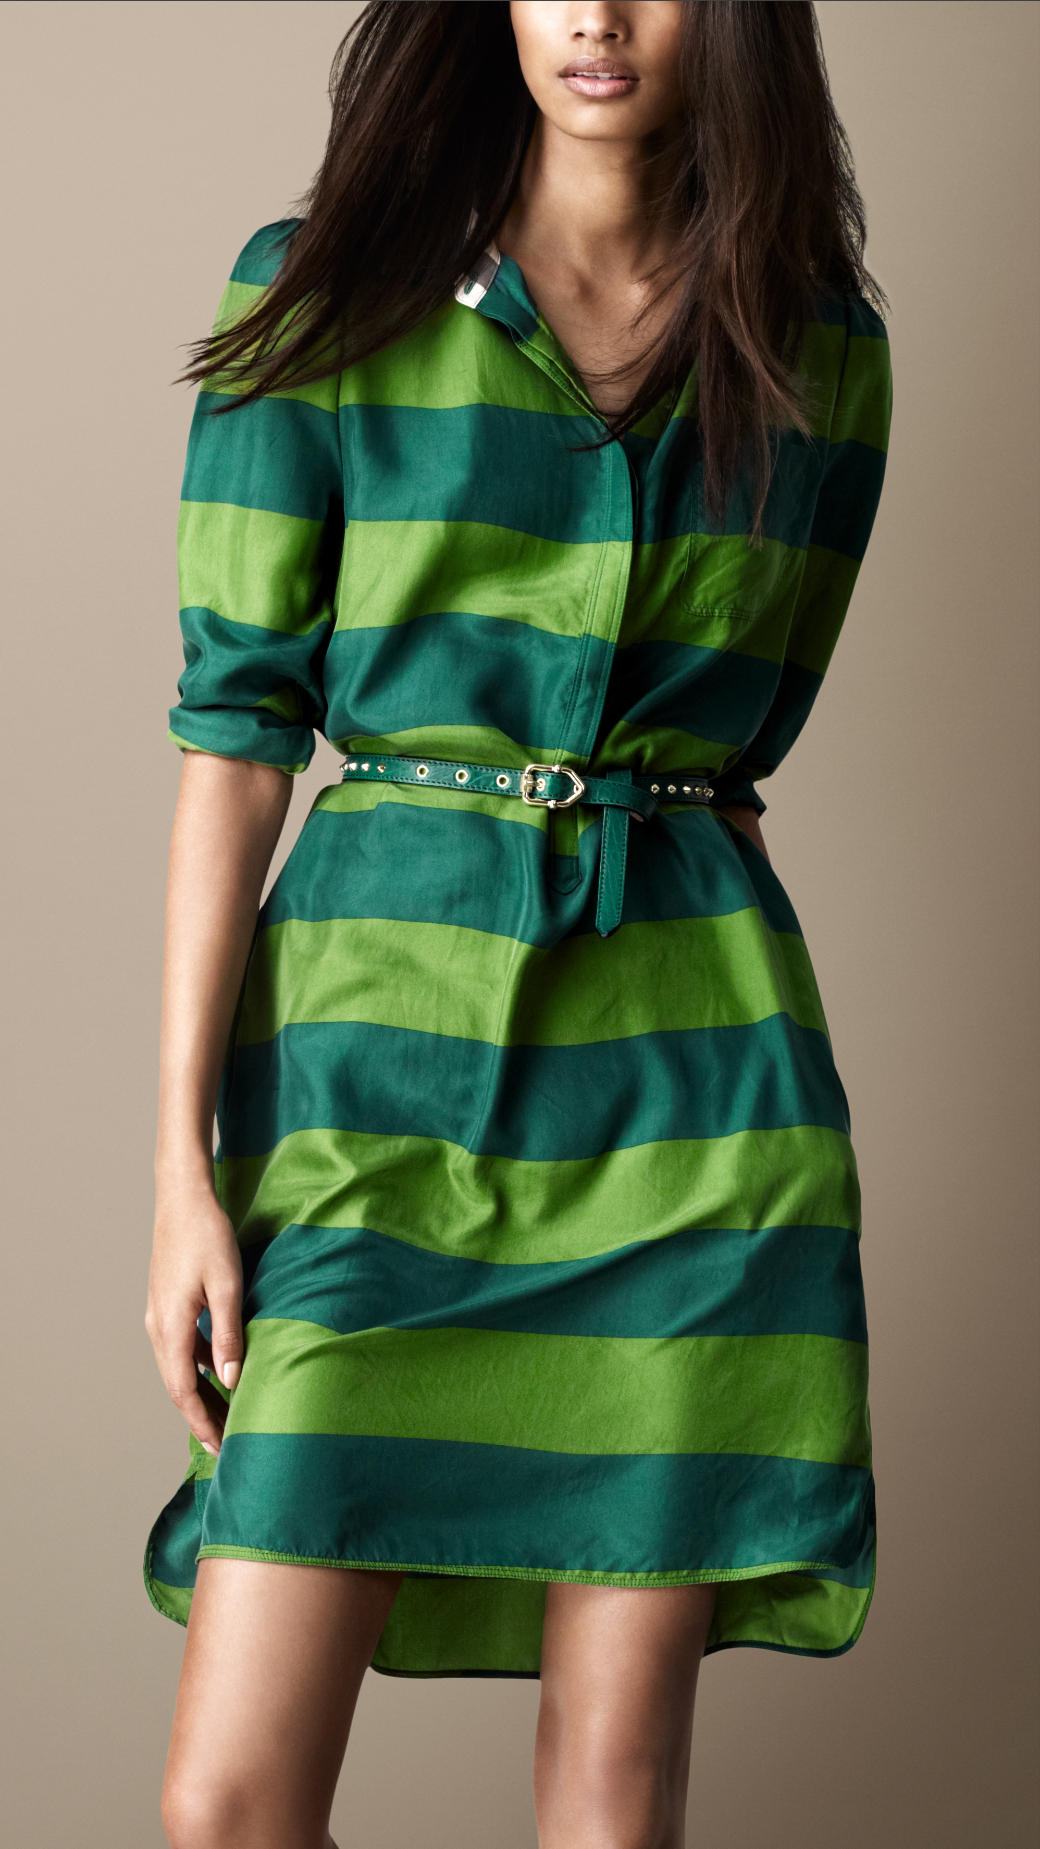 burberry striped dress